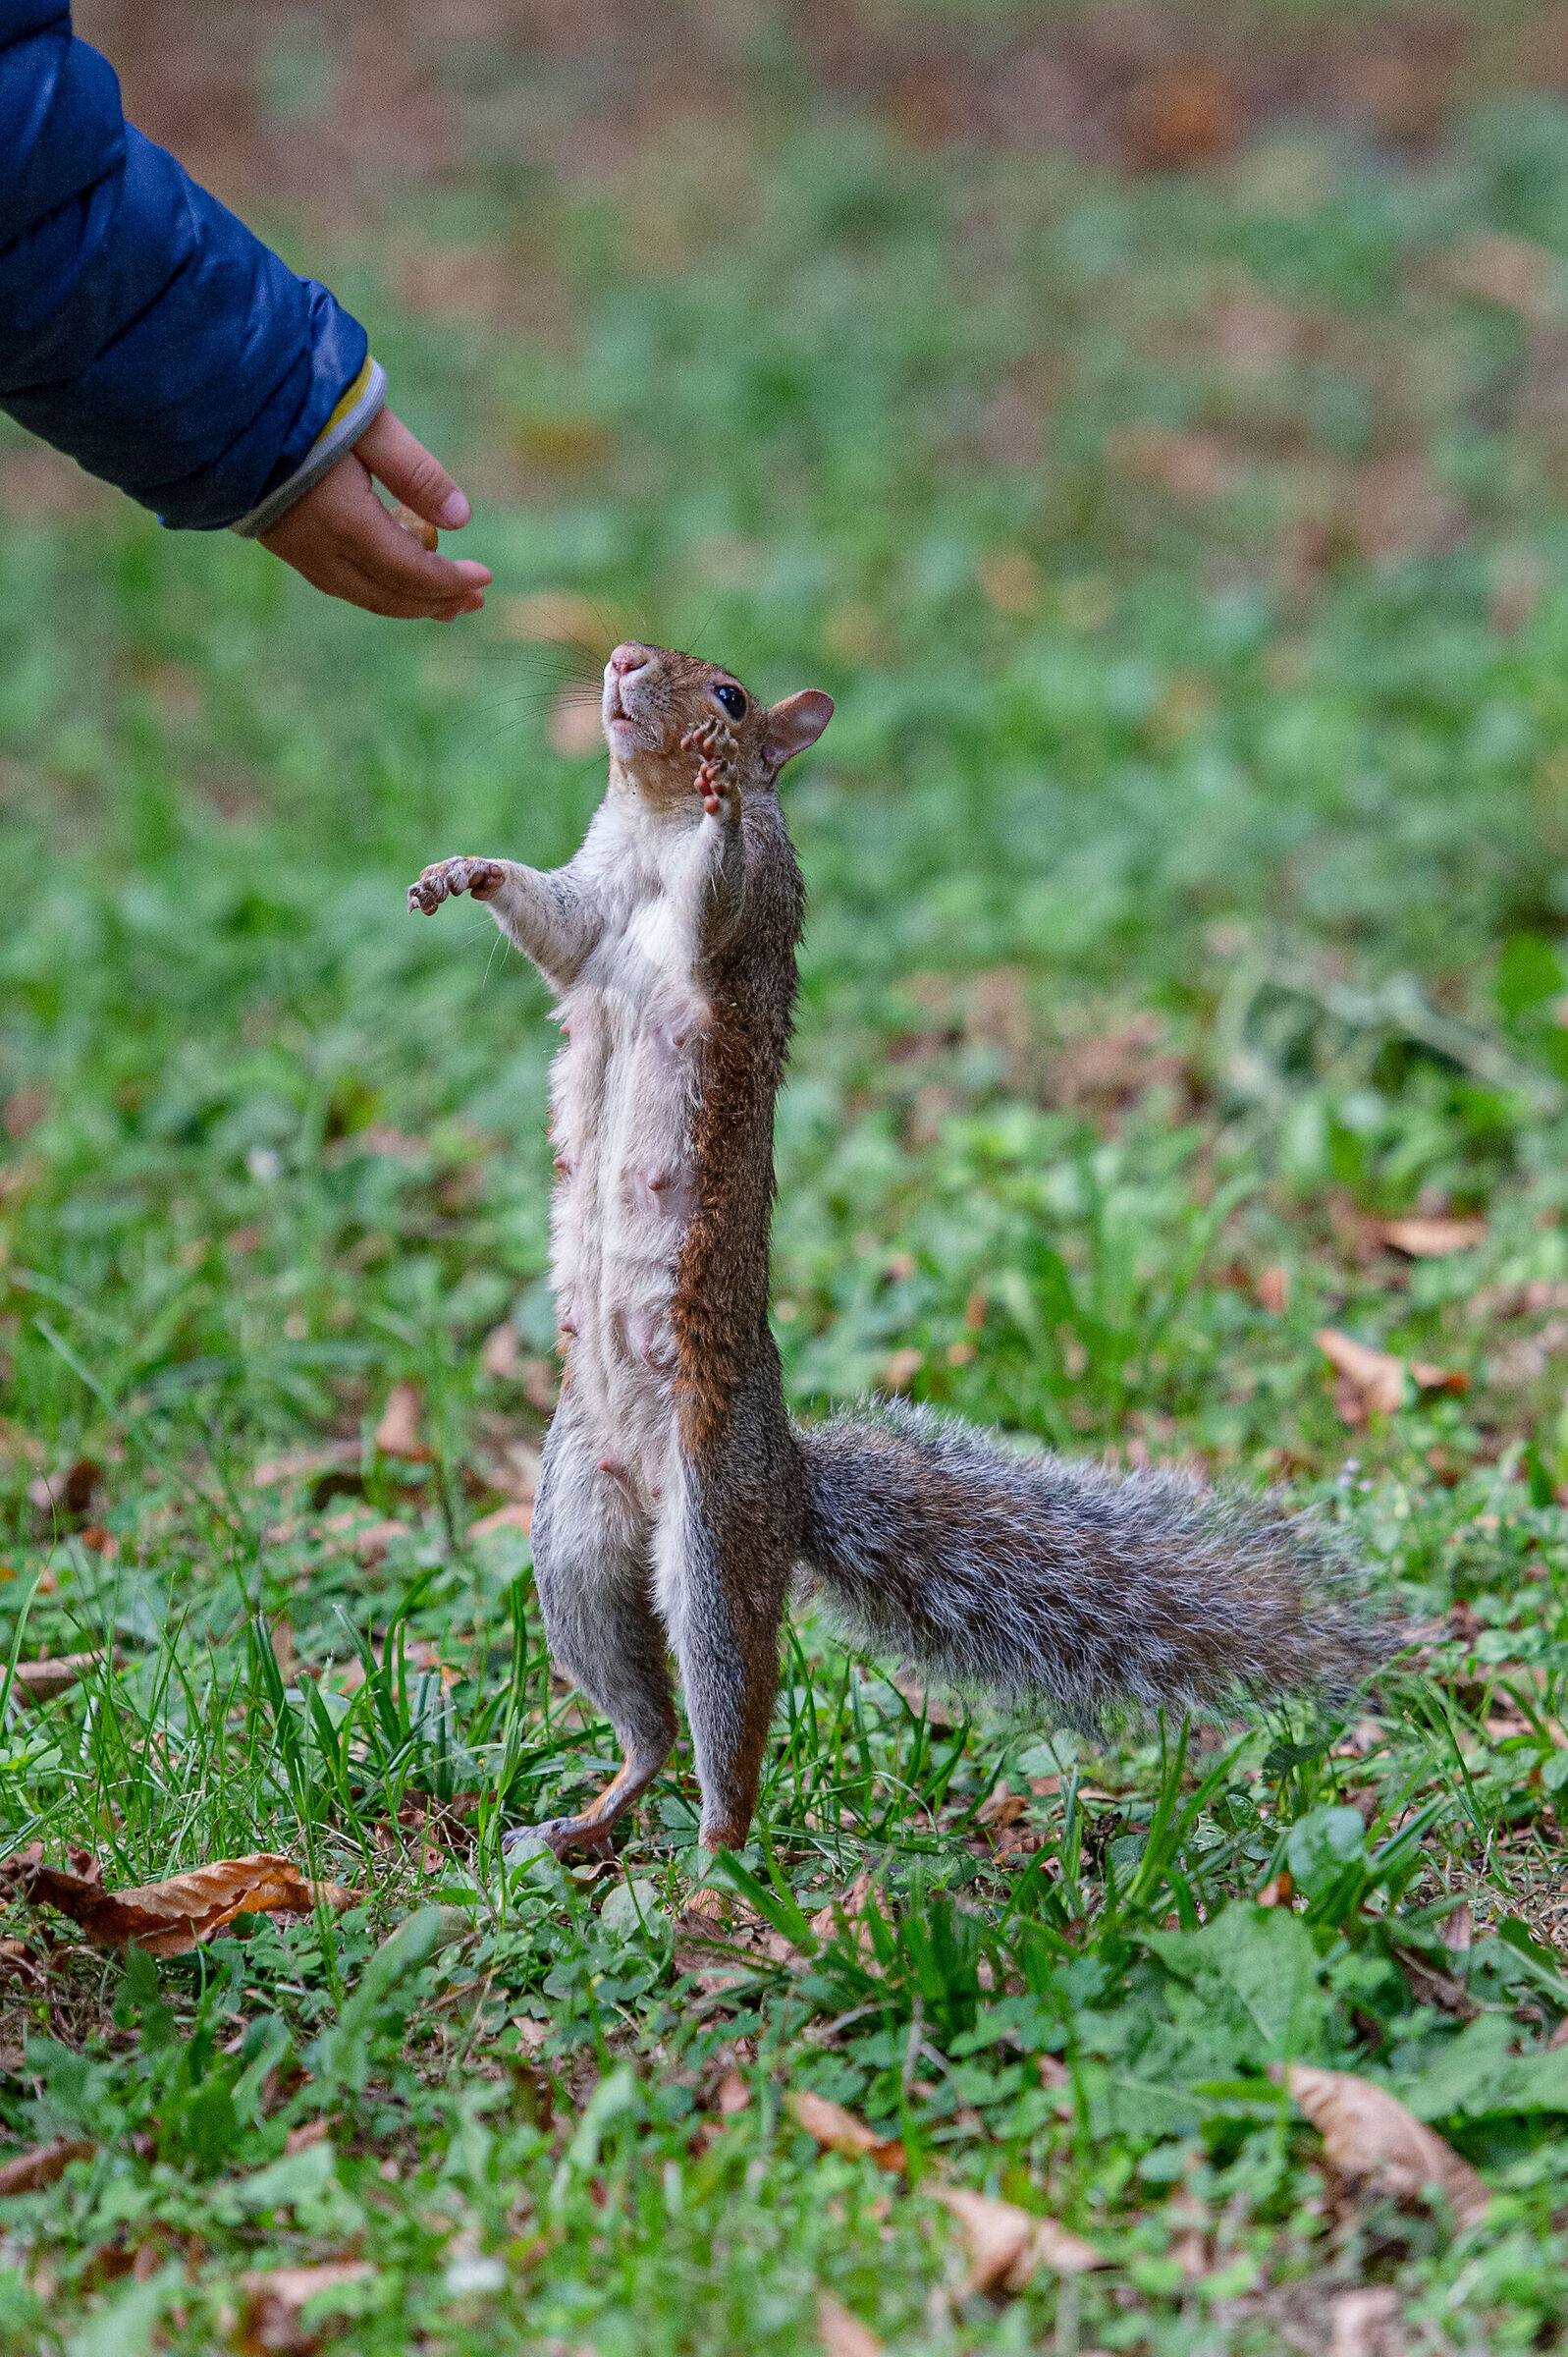 Squirrel at monza park...